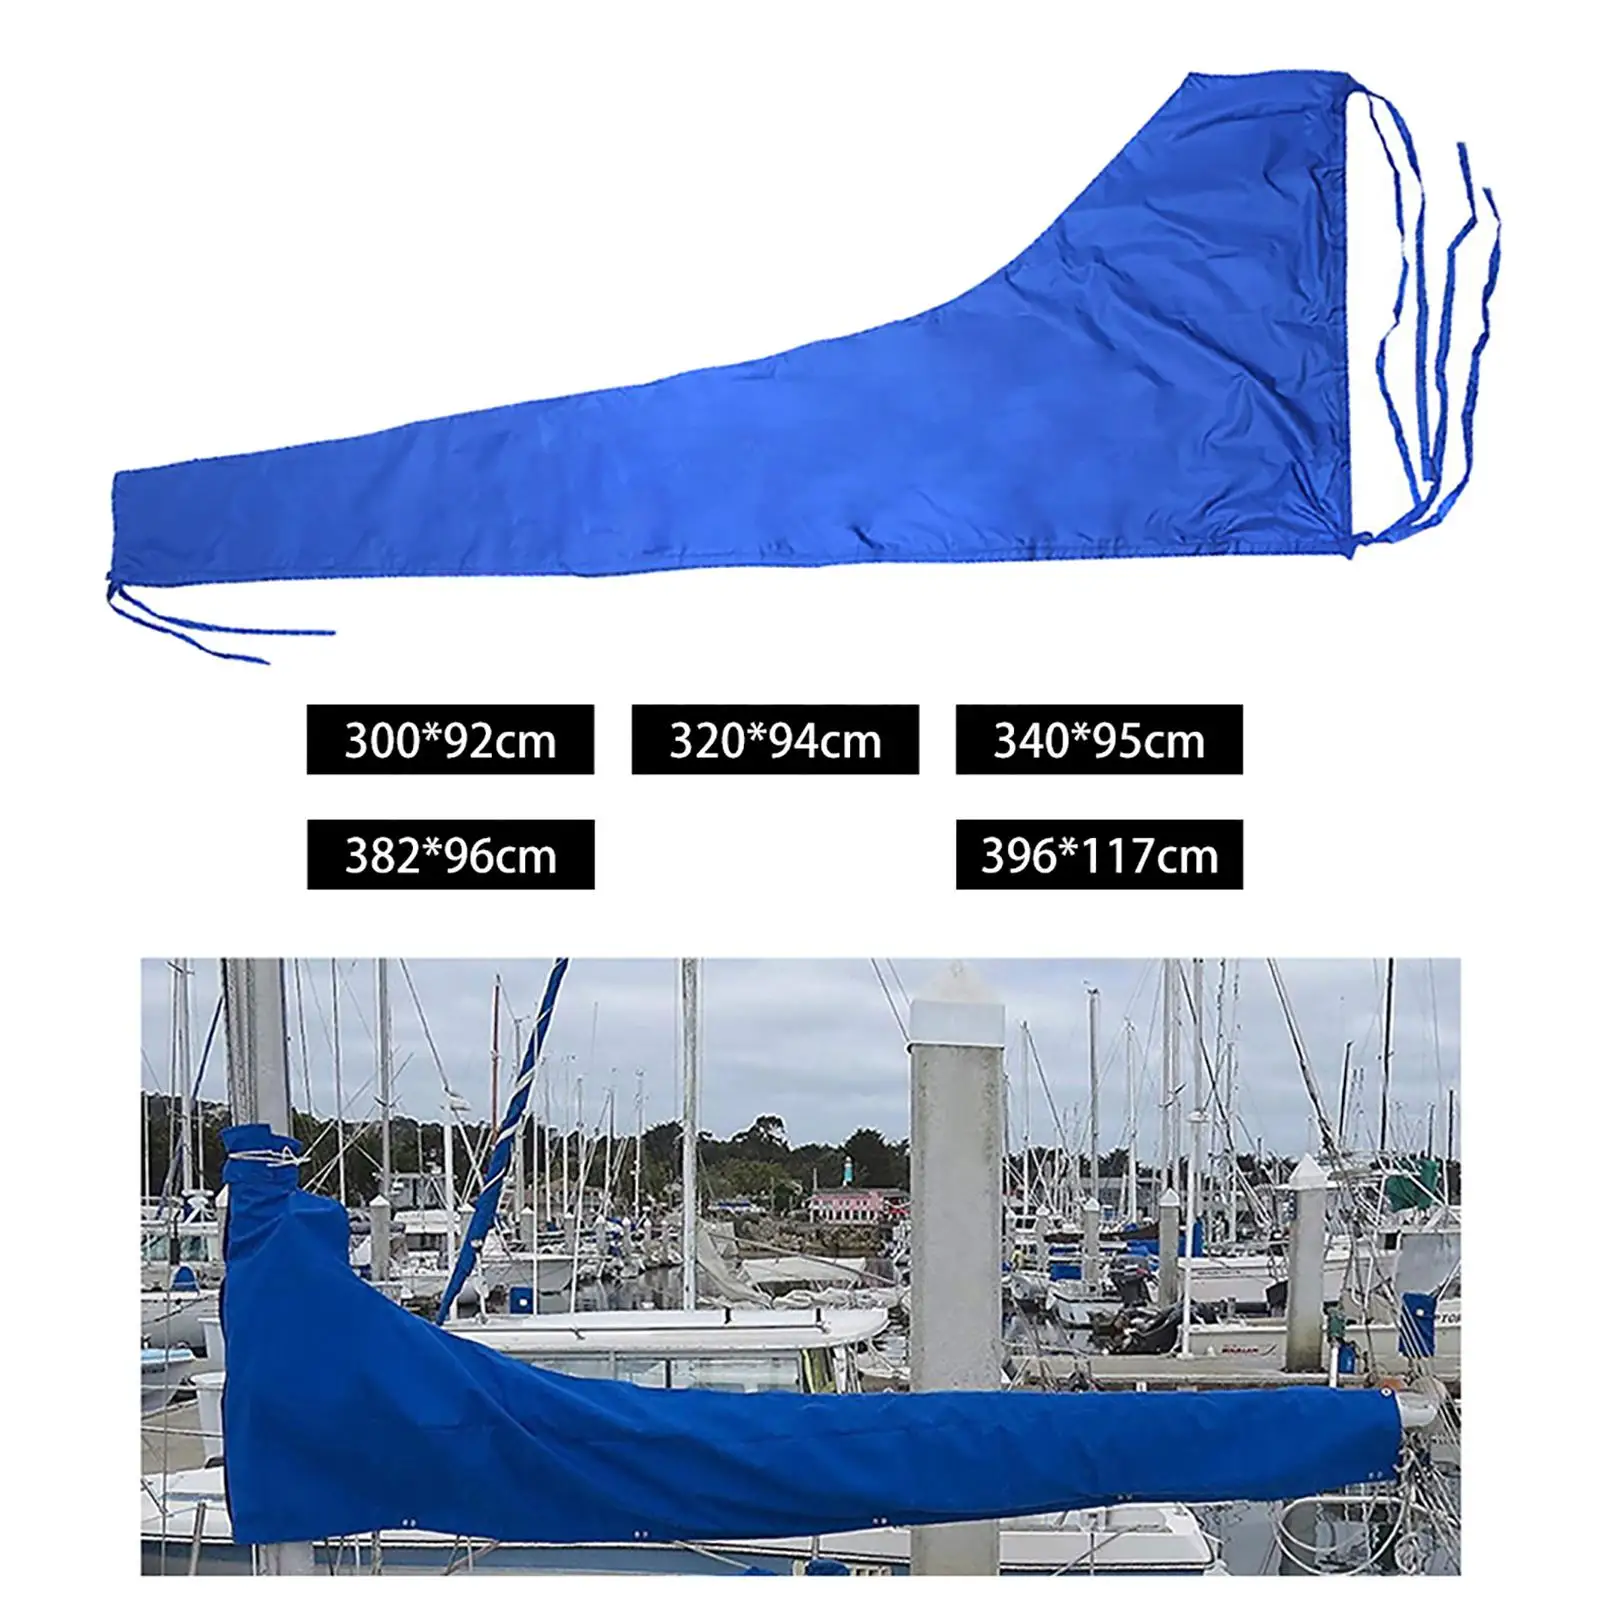 Mainsail Boom Cover Anti Scratch Adjustable Strap PU Coated Sail Cover Blue